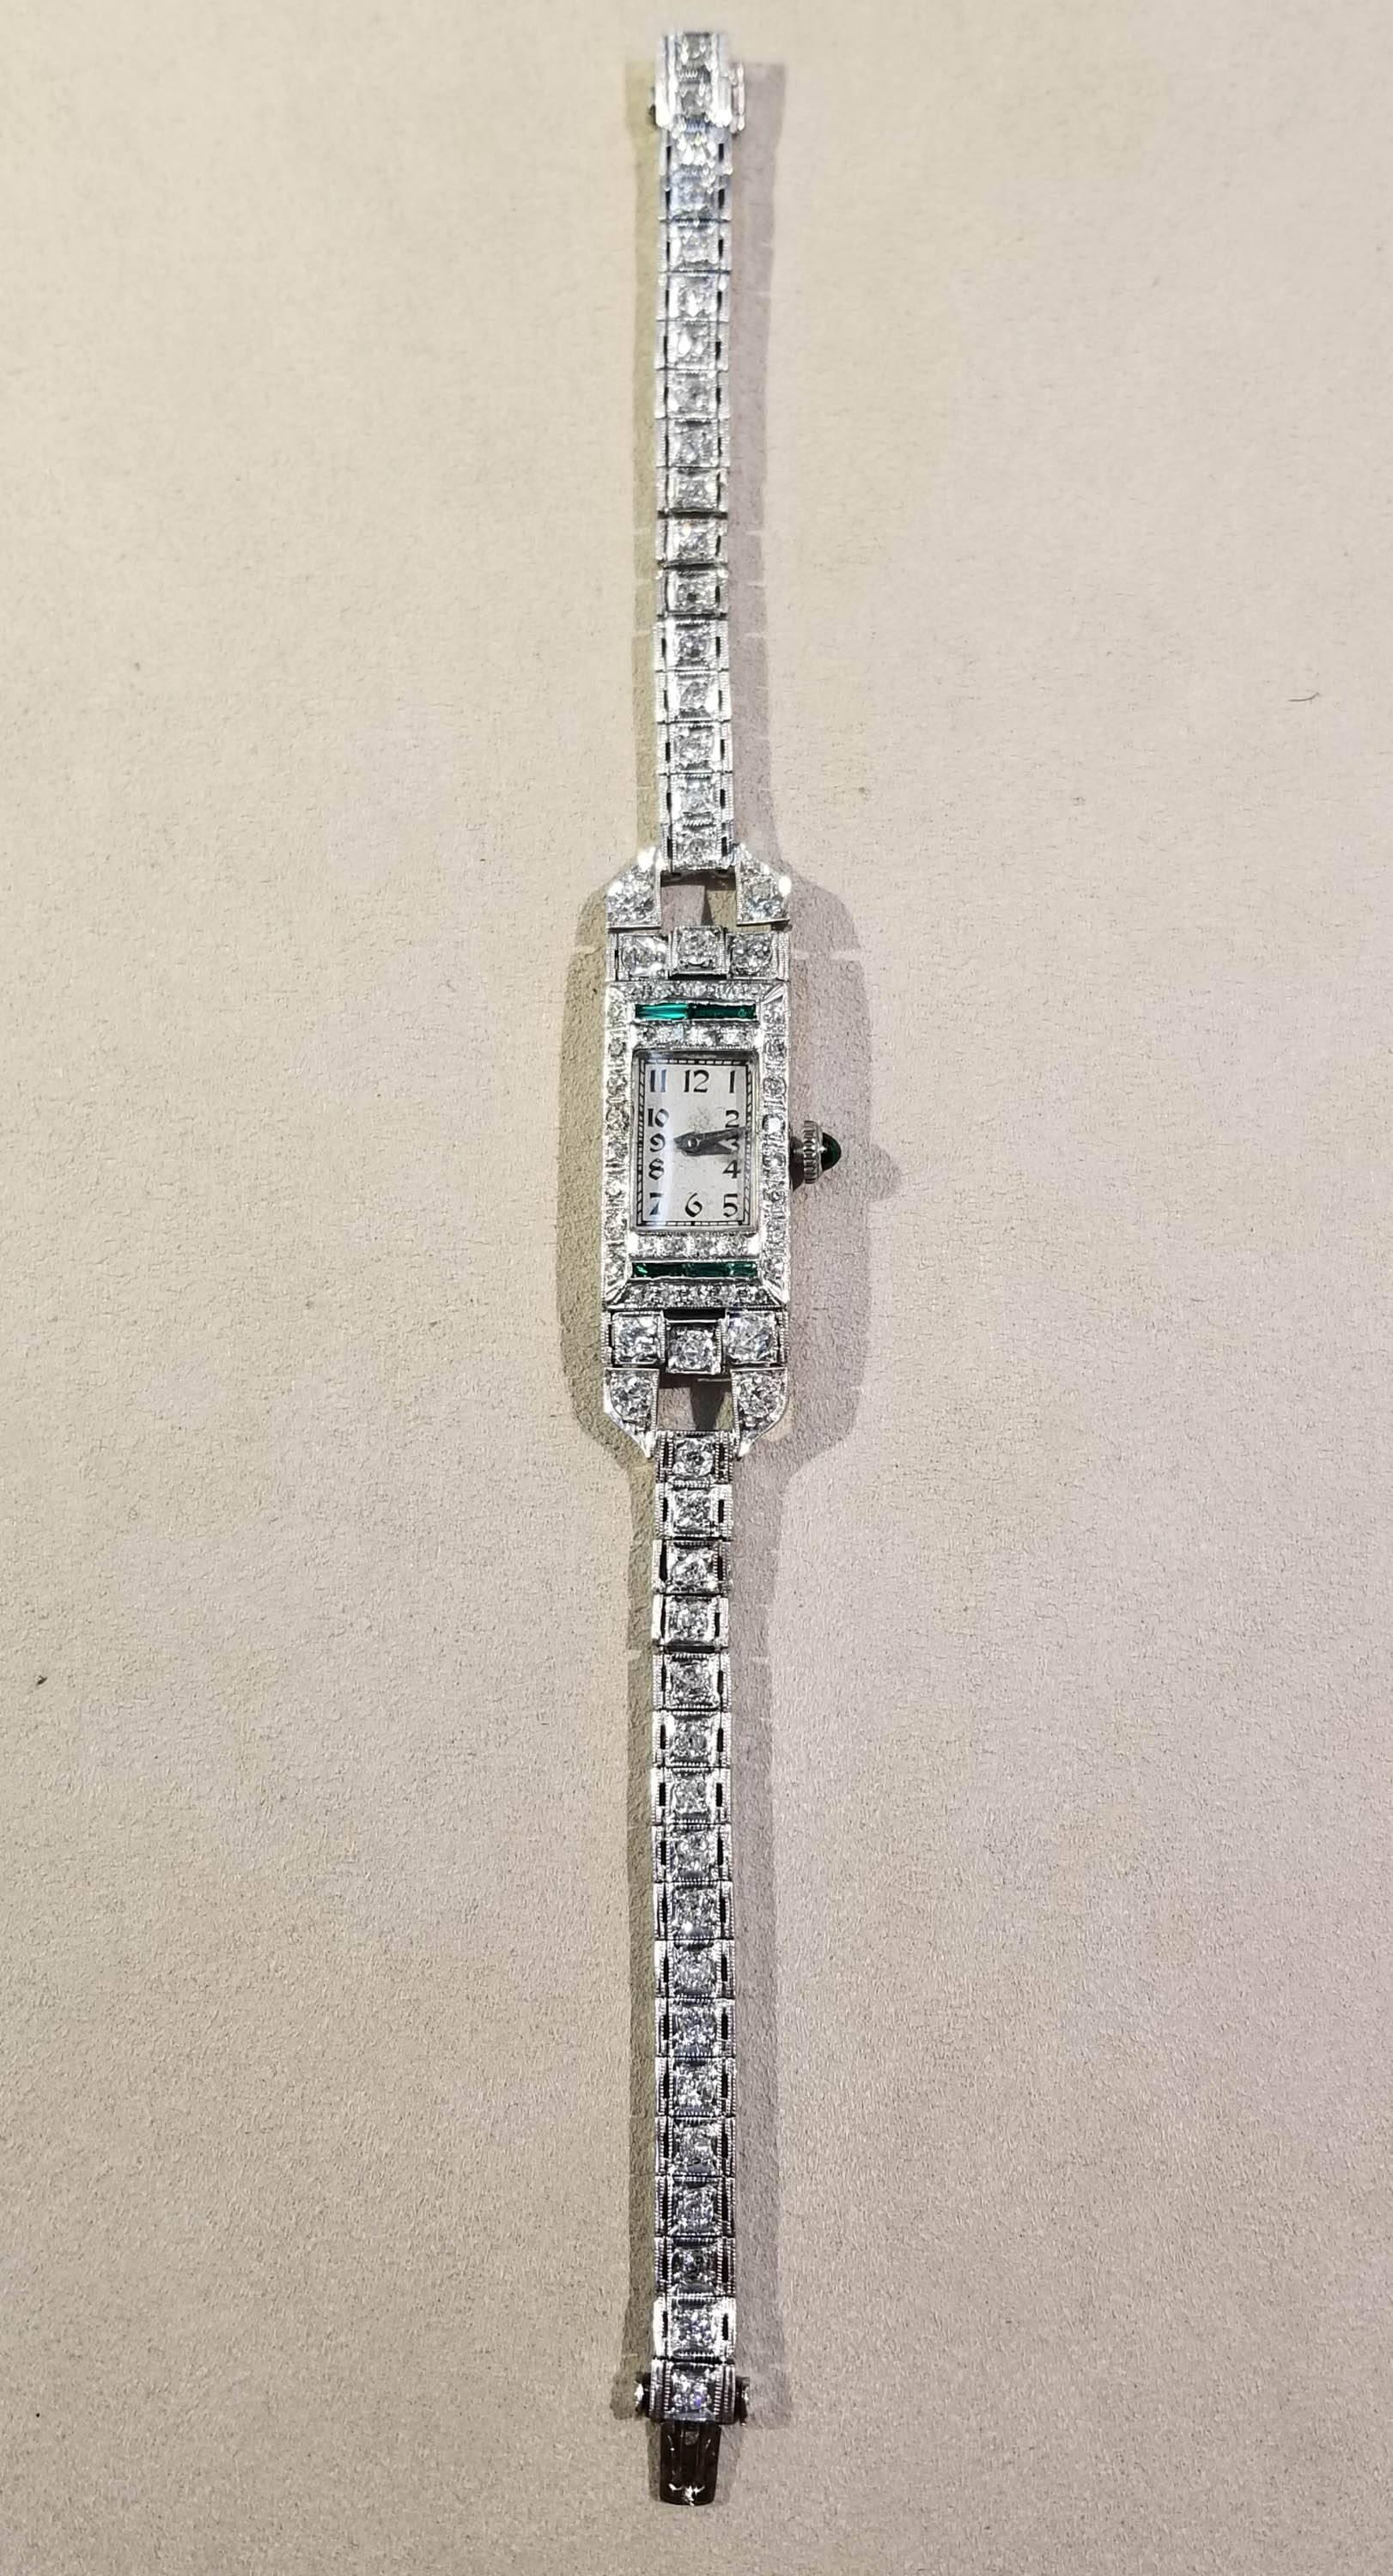 Wristwatch, Platinum, Diamond & Emerald, Art Deco, c.1920s.
Diamonds: 78 Old European Cut, HI in color, SI in clarity, weighing 3.20 cts.
Emerald: 1 Cabochon/Emerald Cut, 5 Baguette Cut, weighing .20 cts.